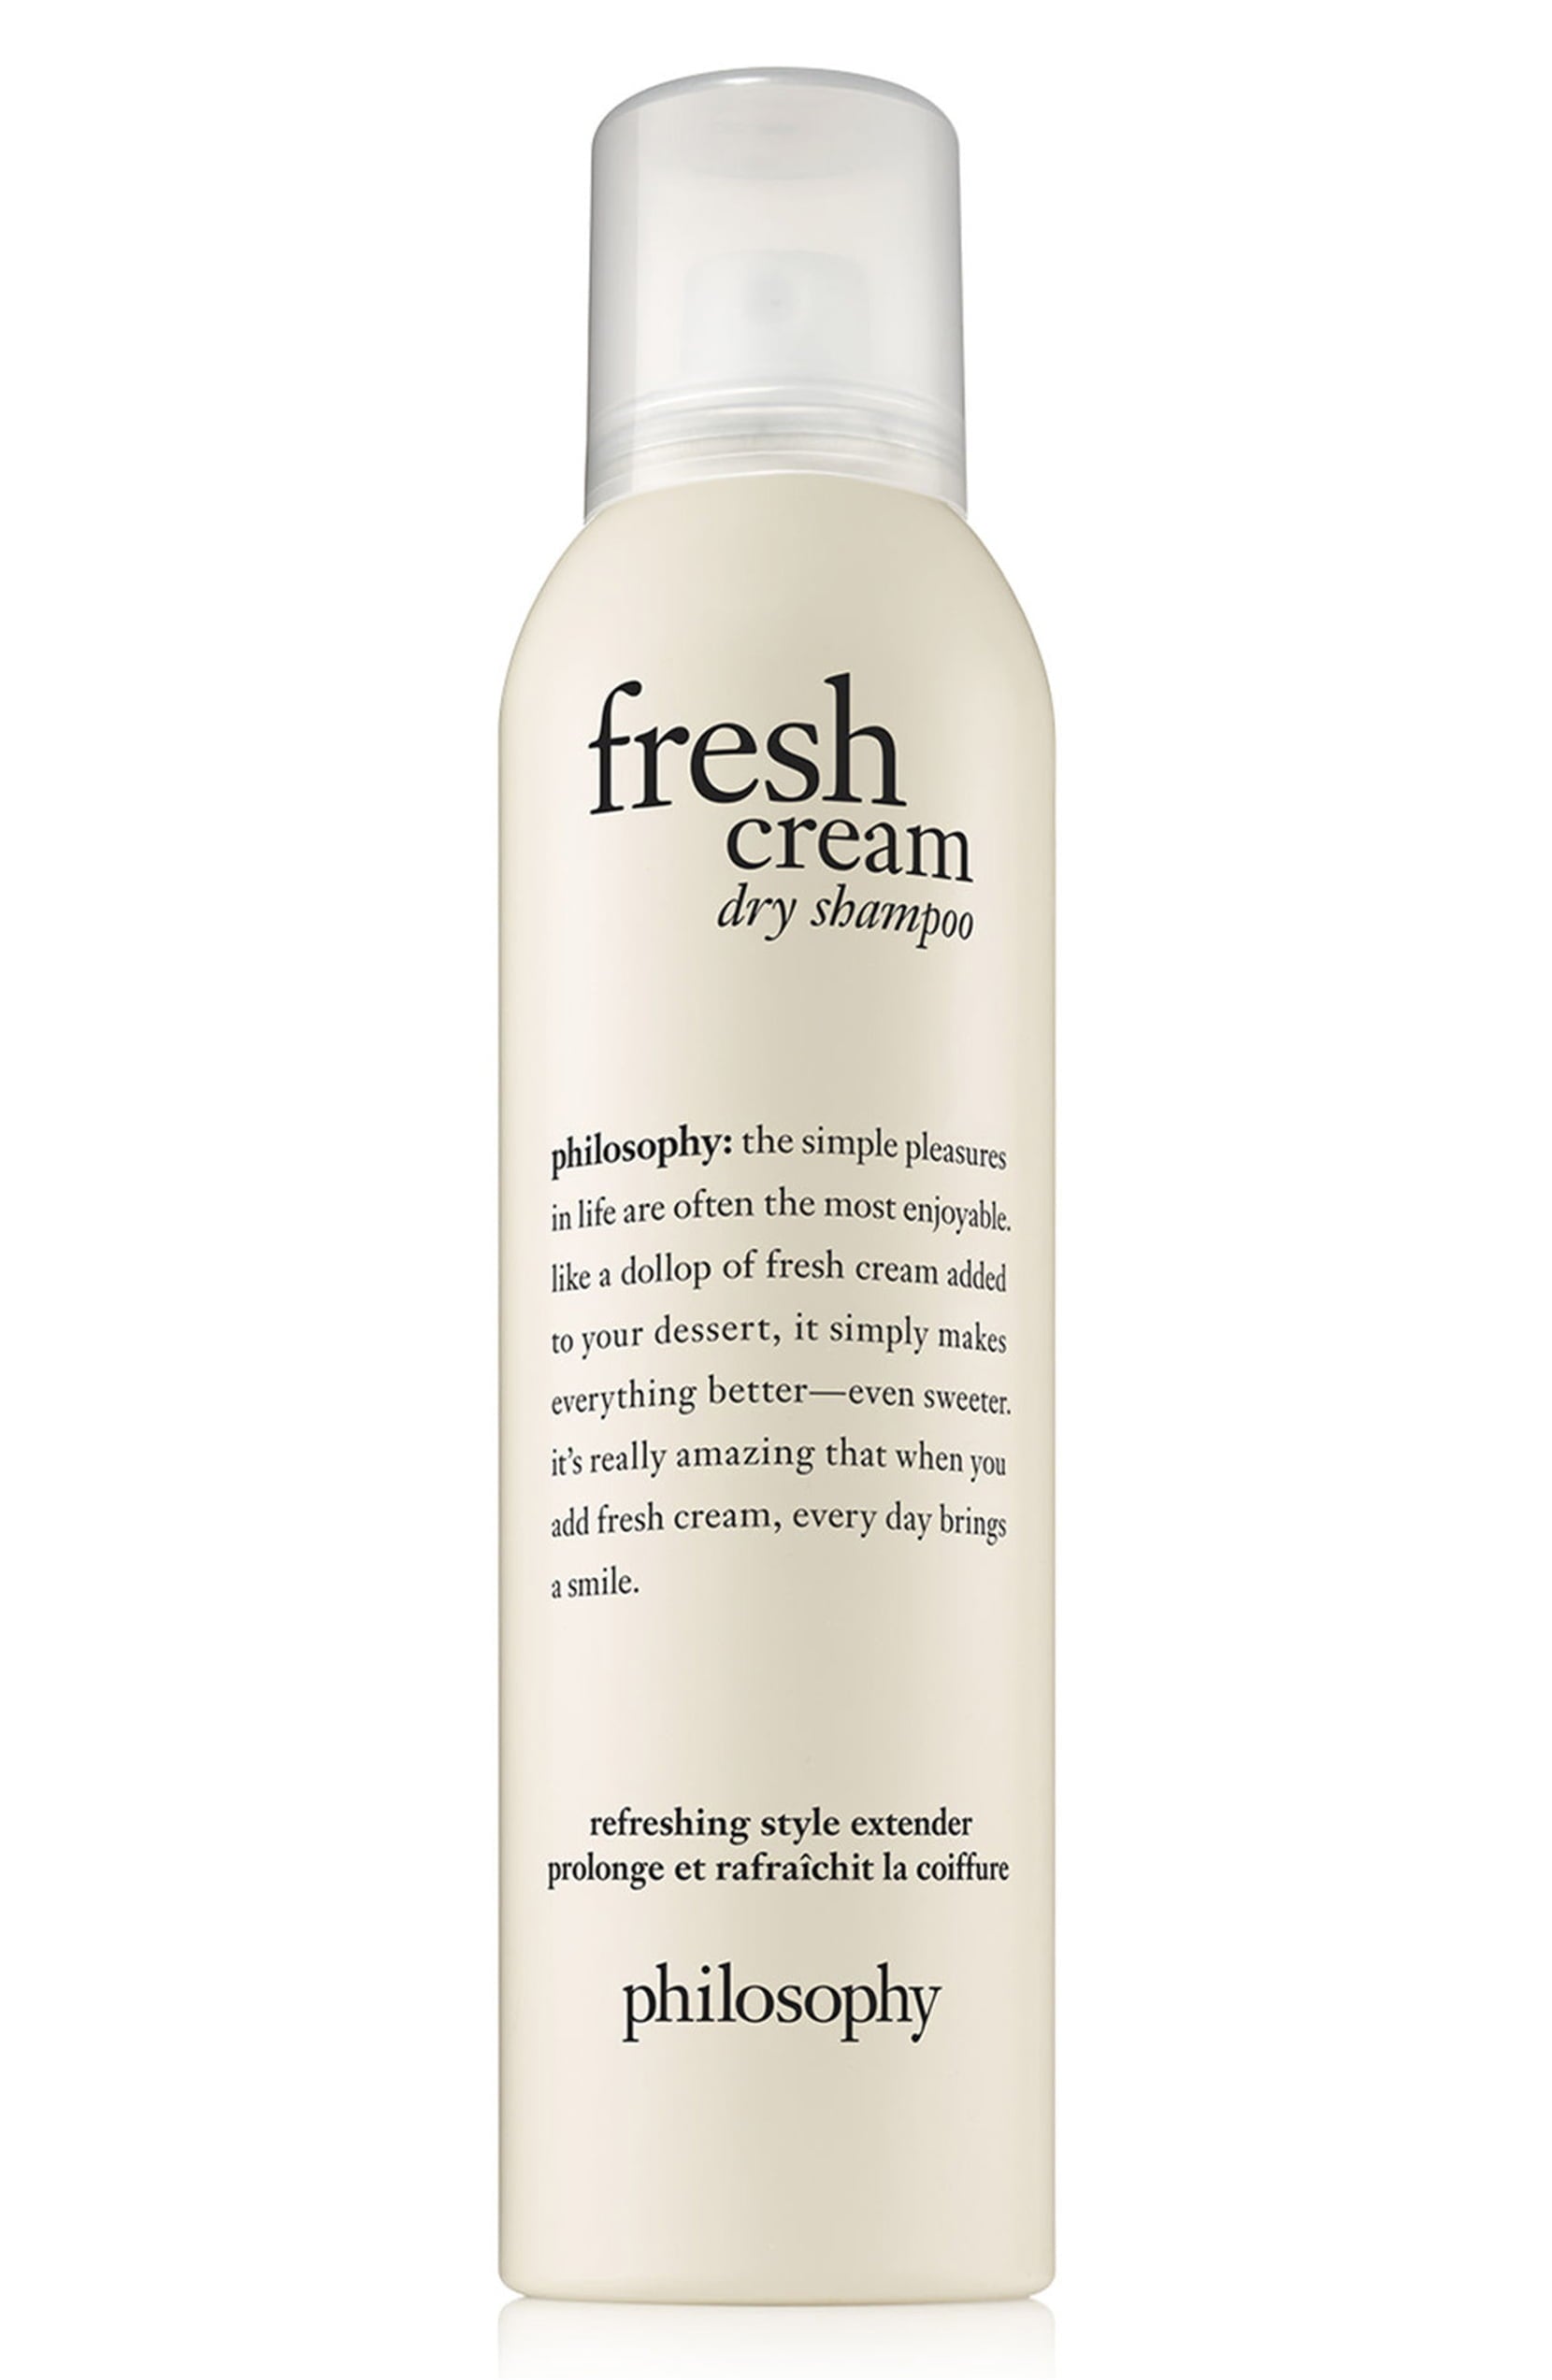 philosophy fresh cream dry shampoo